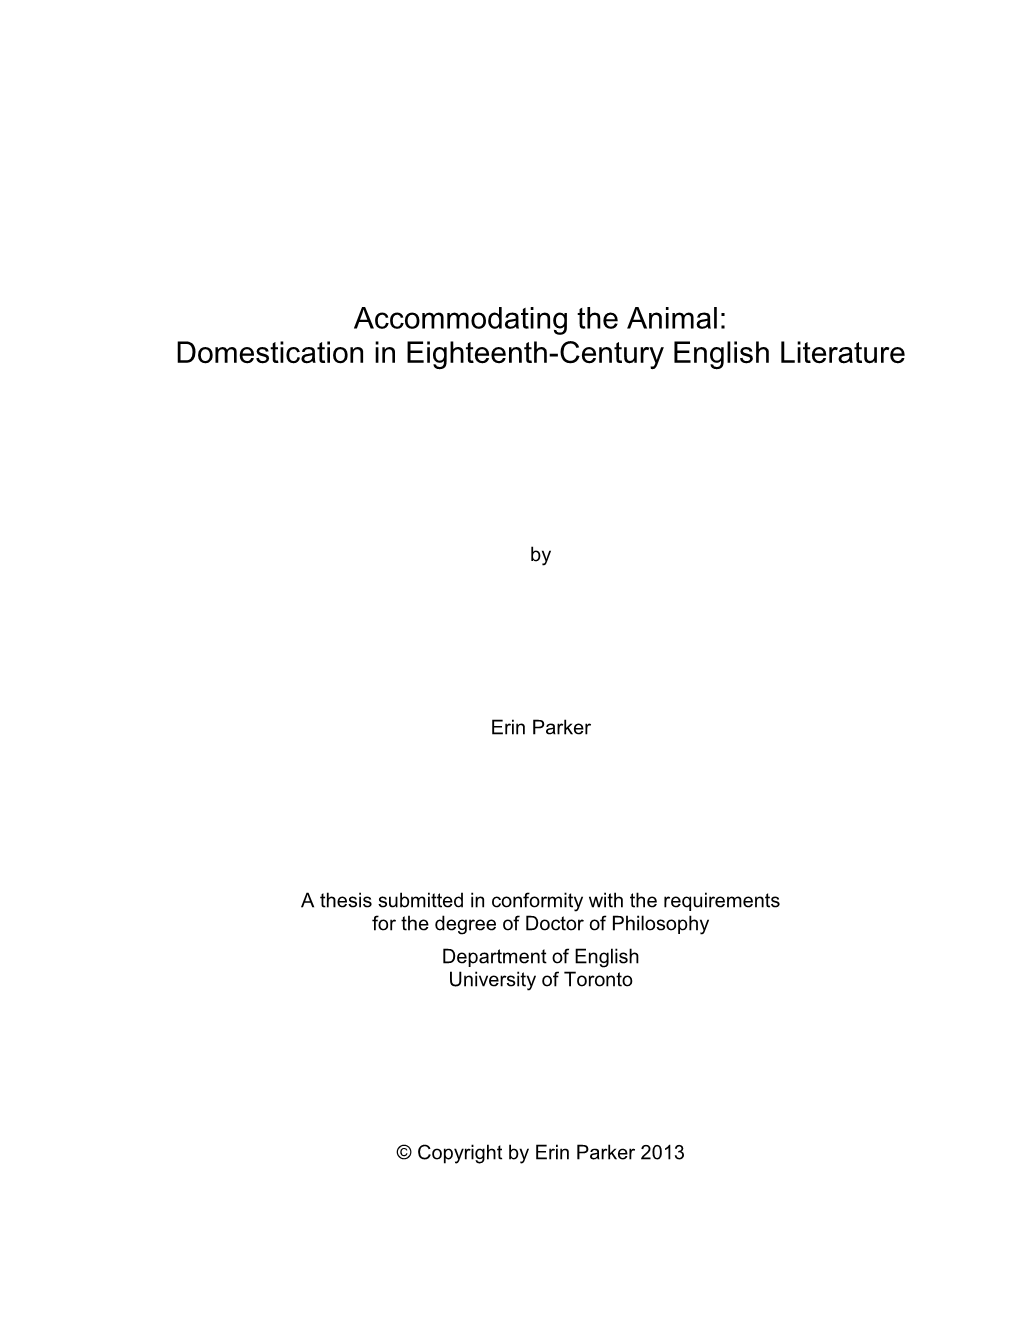 Domestication in Eighteenth-Century English Literature